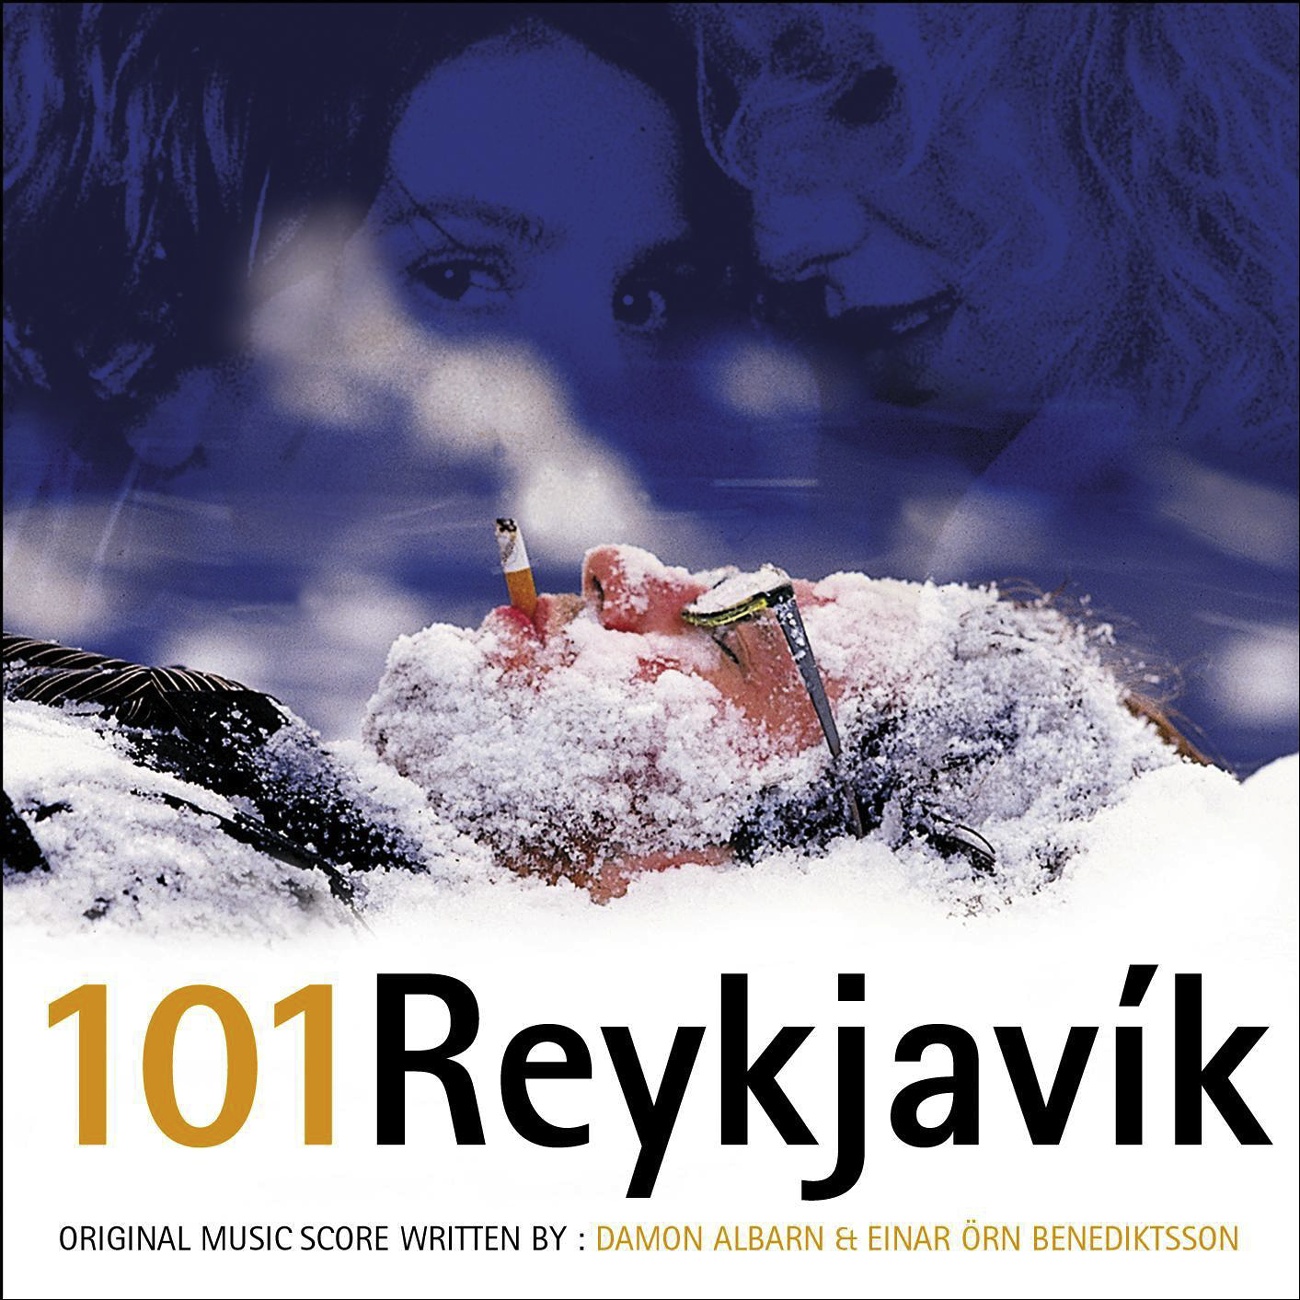 101 Reykjavic Theme (Remixed By Emiliana Torrini)